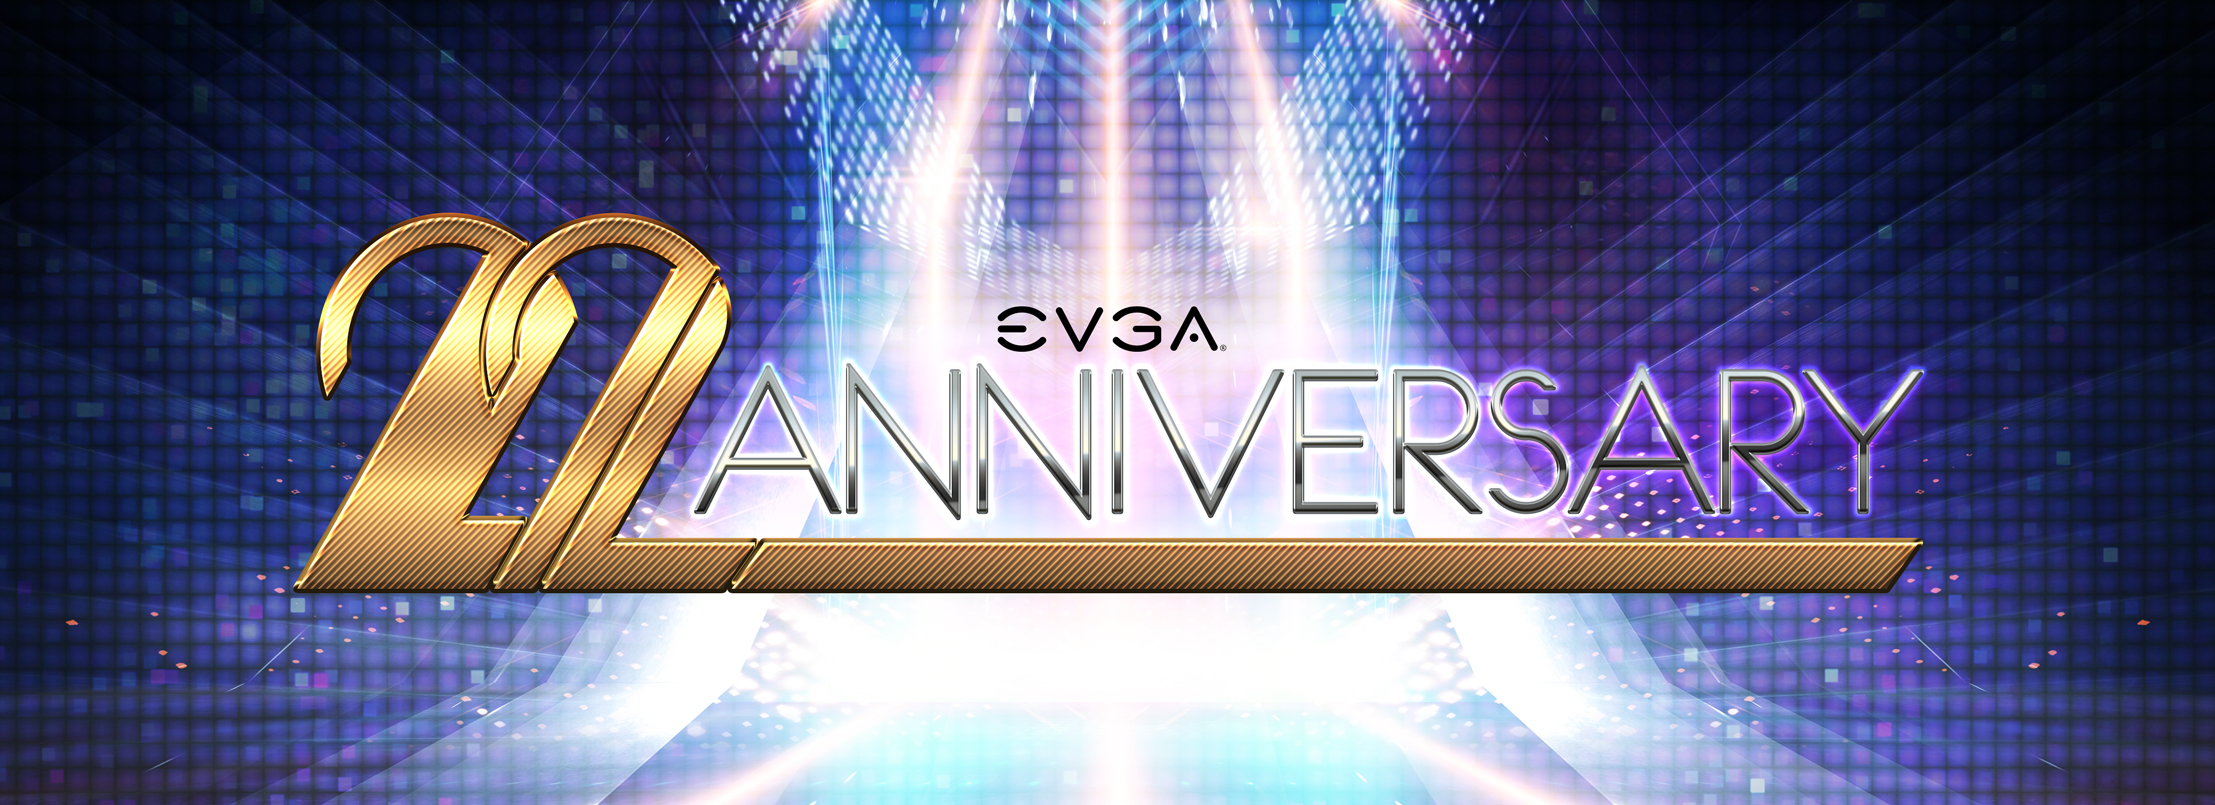 EVGA's 22nd Anniversary - Intel Say What!?